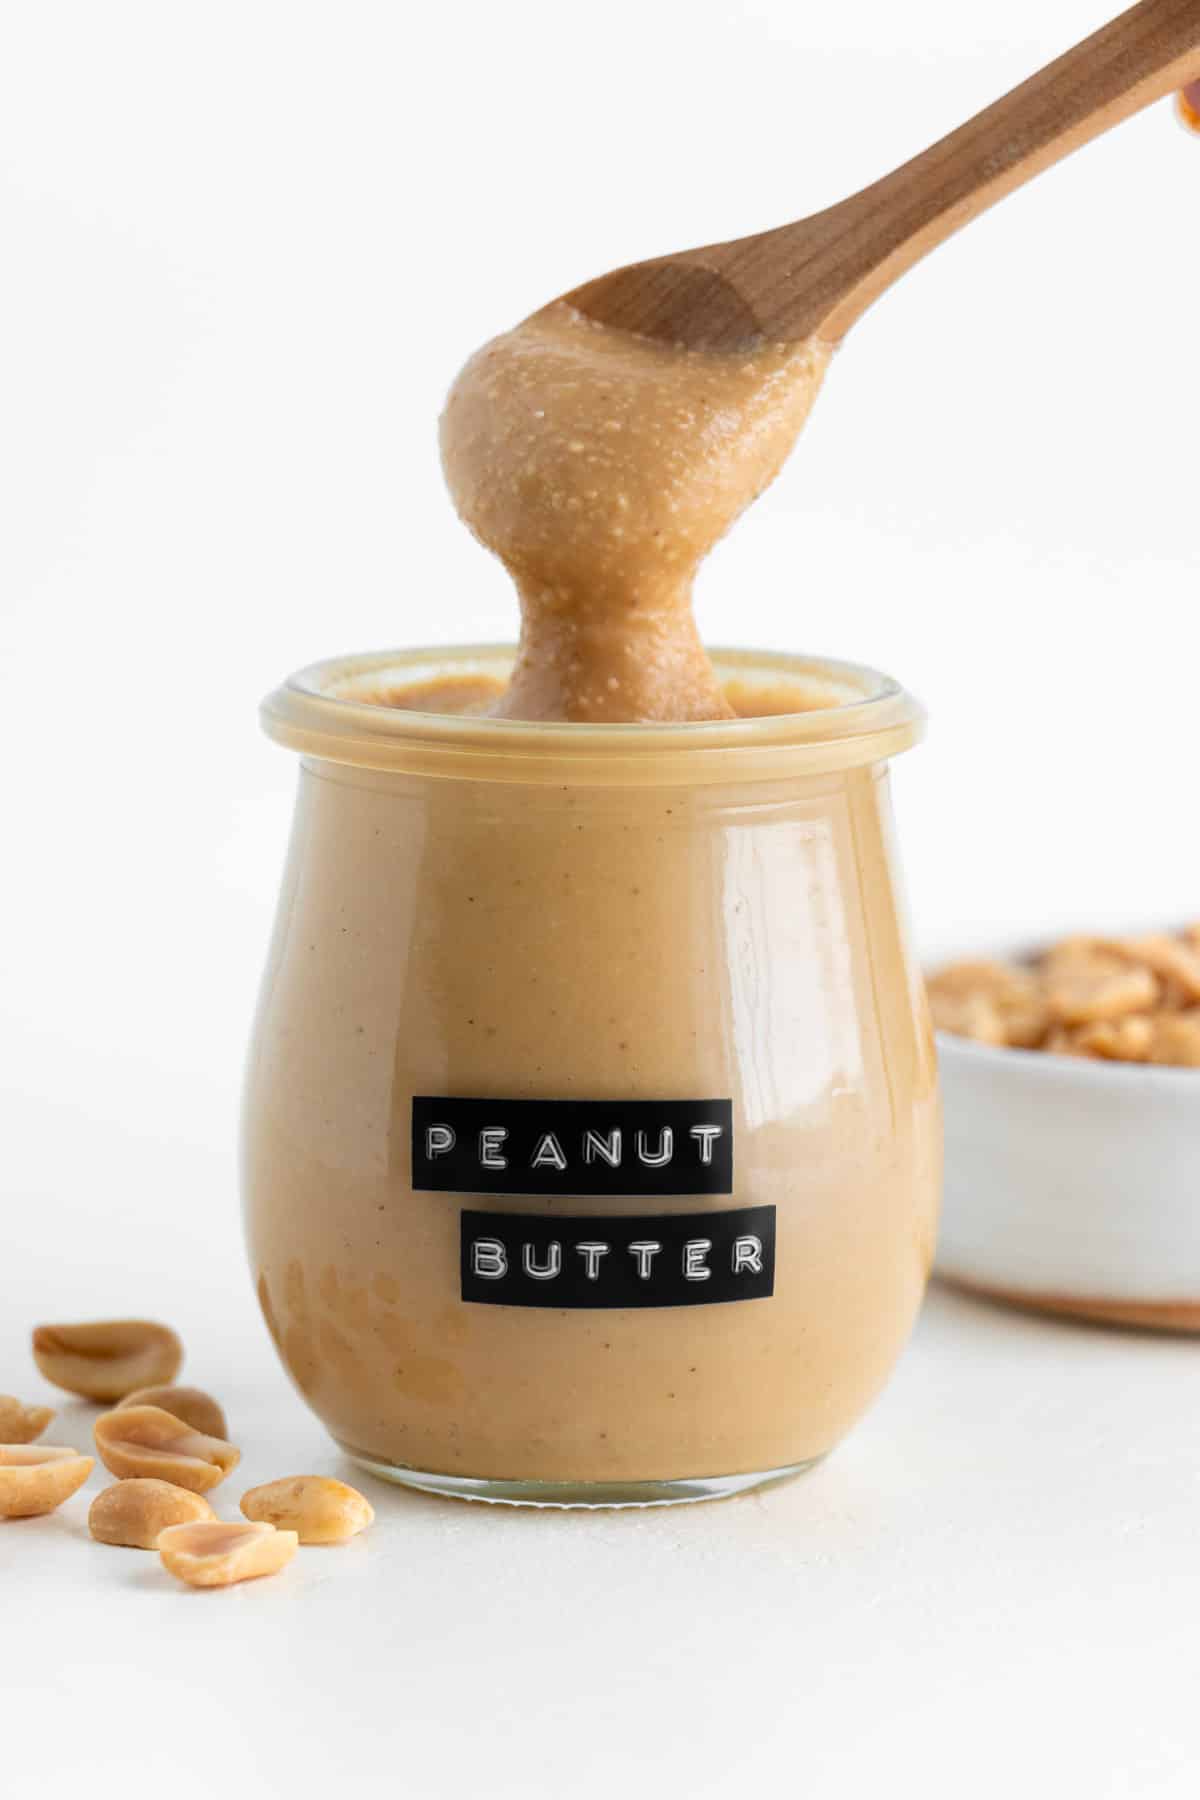 https://www.purelykaylie.com/wp-content/uploads/2020/07/Homemade-Peanut-Butter-11.jpg